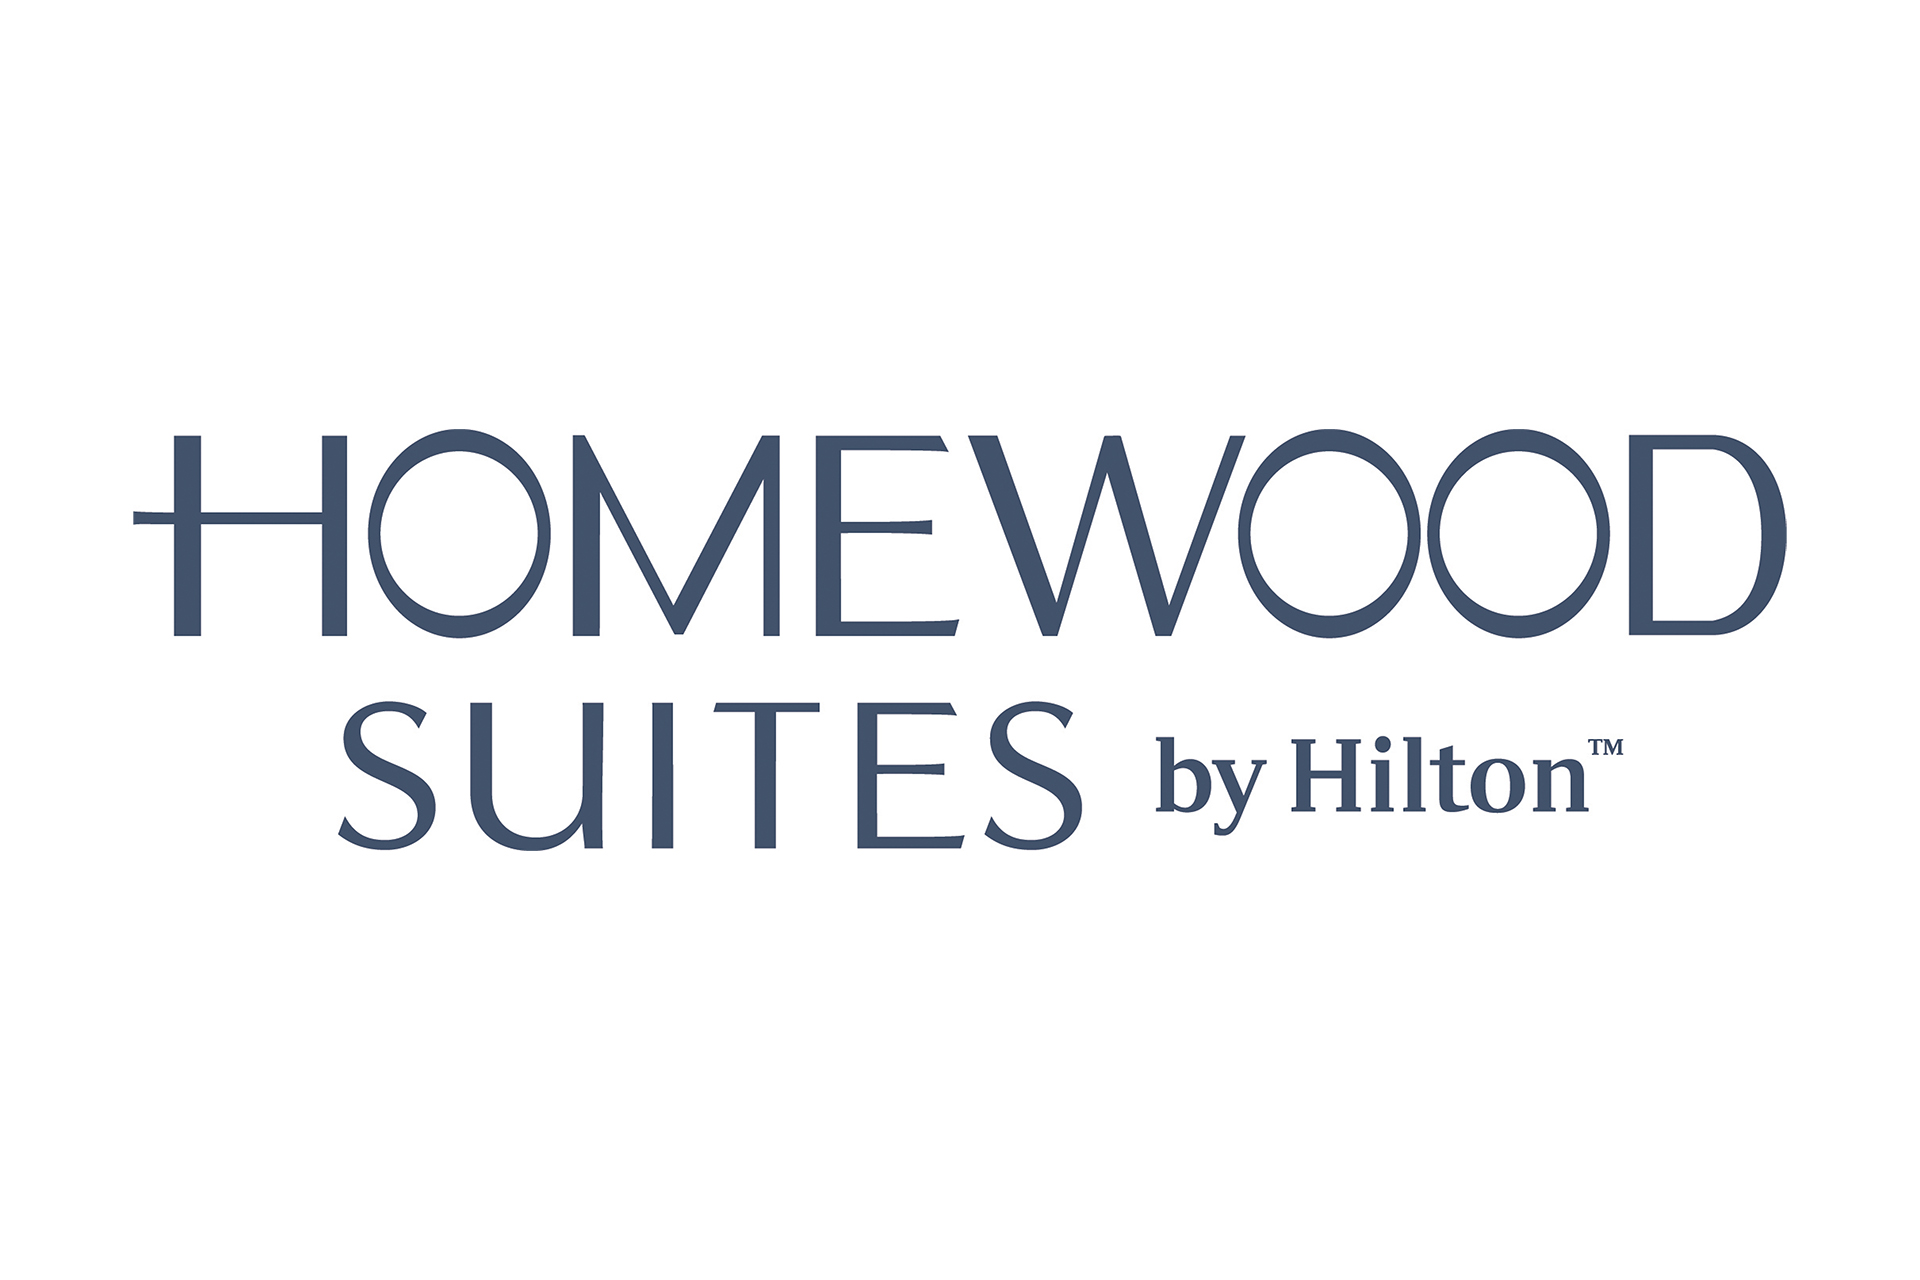 Homewood Suites by Hilton Unveils Brand Refresh